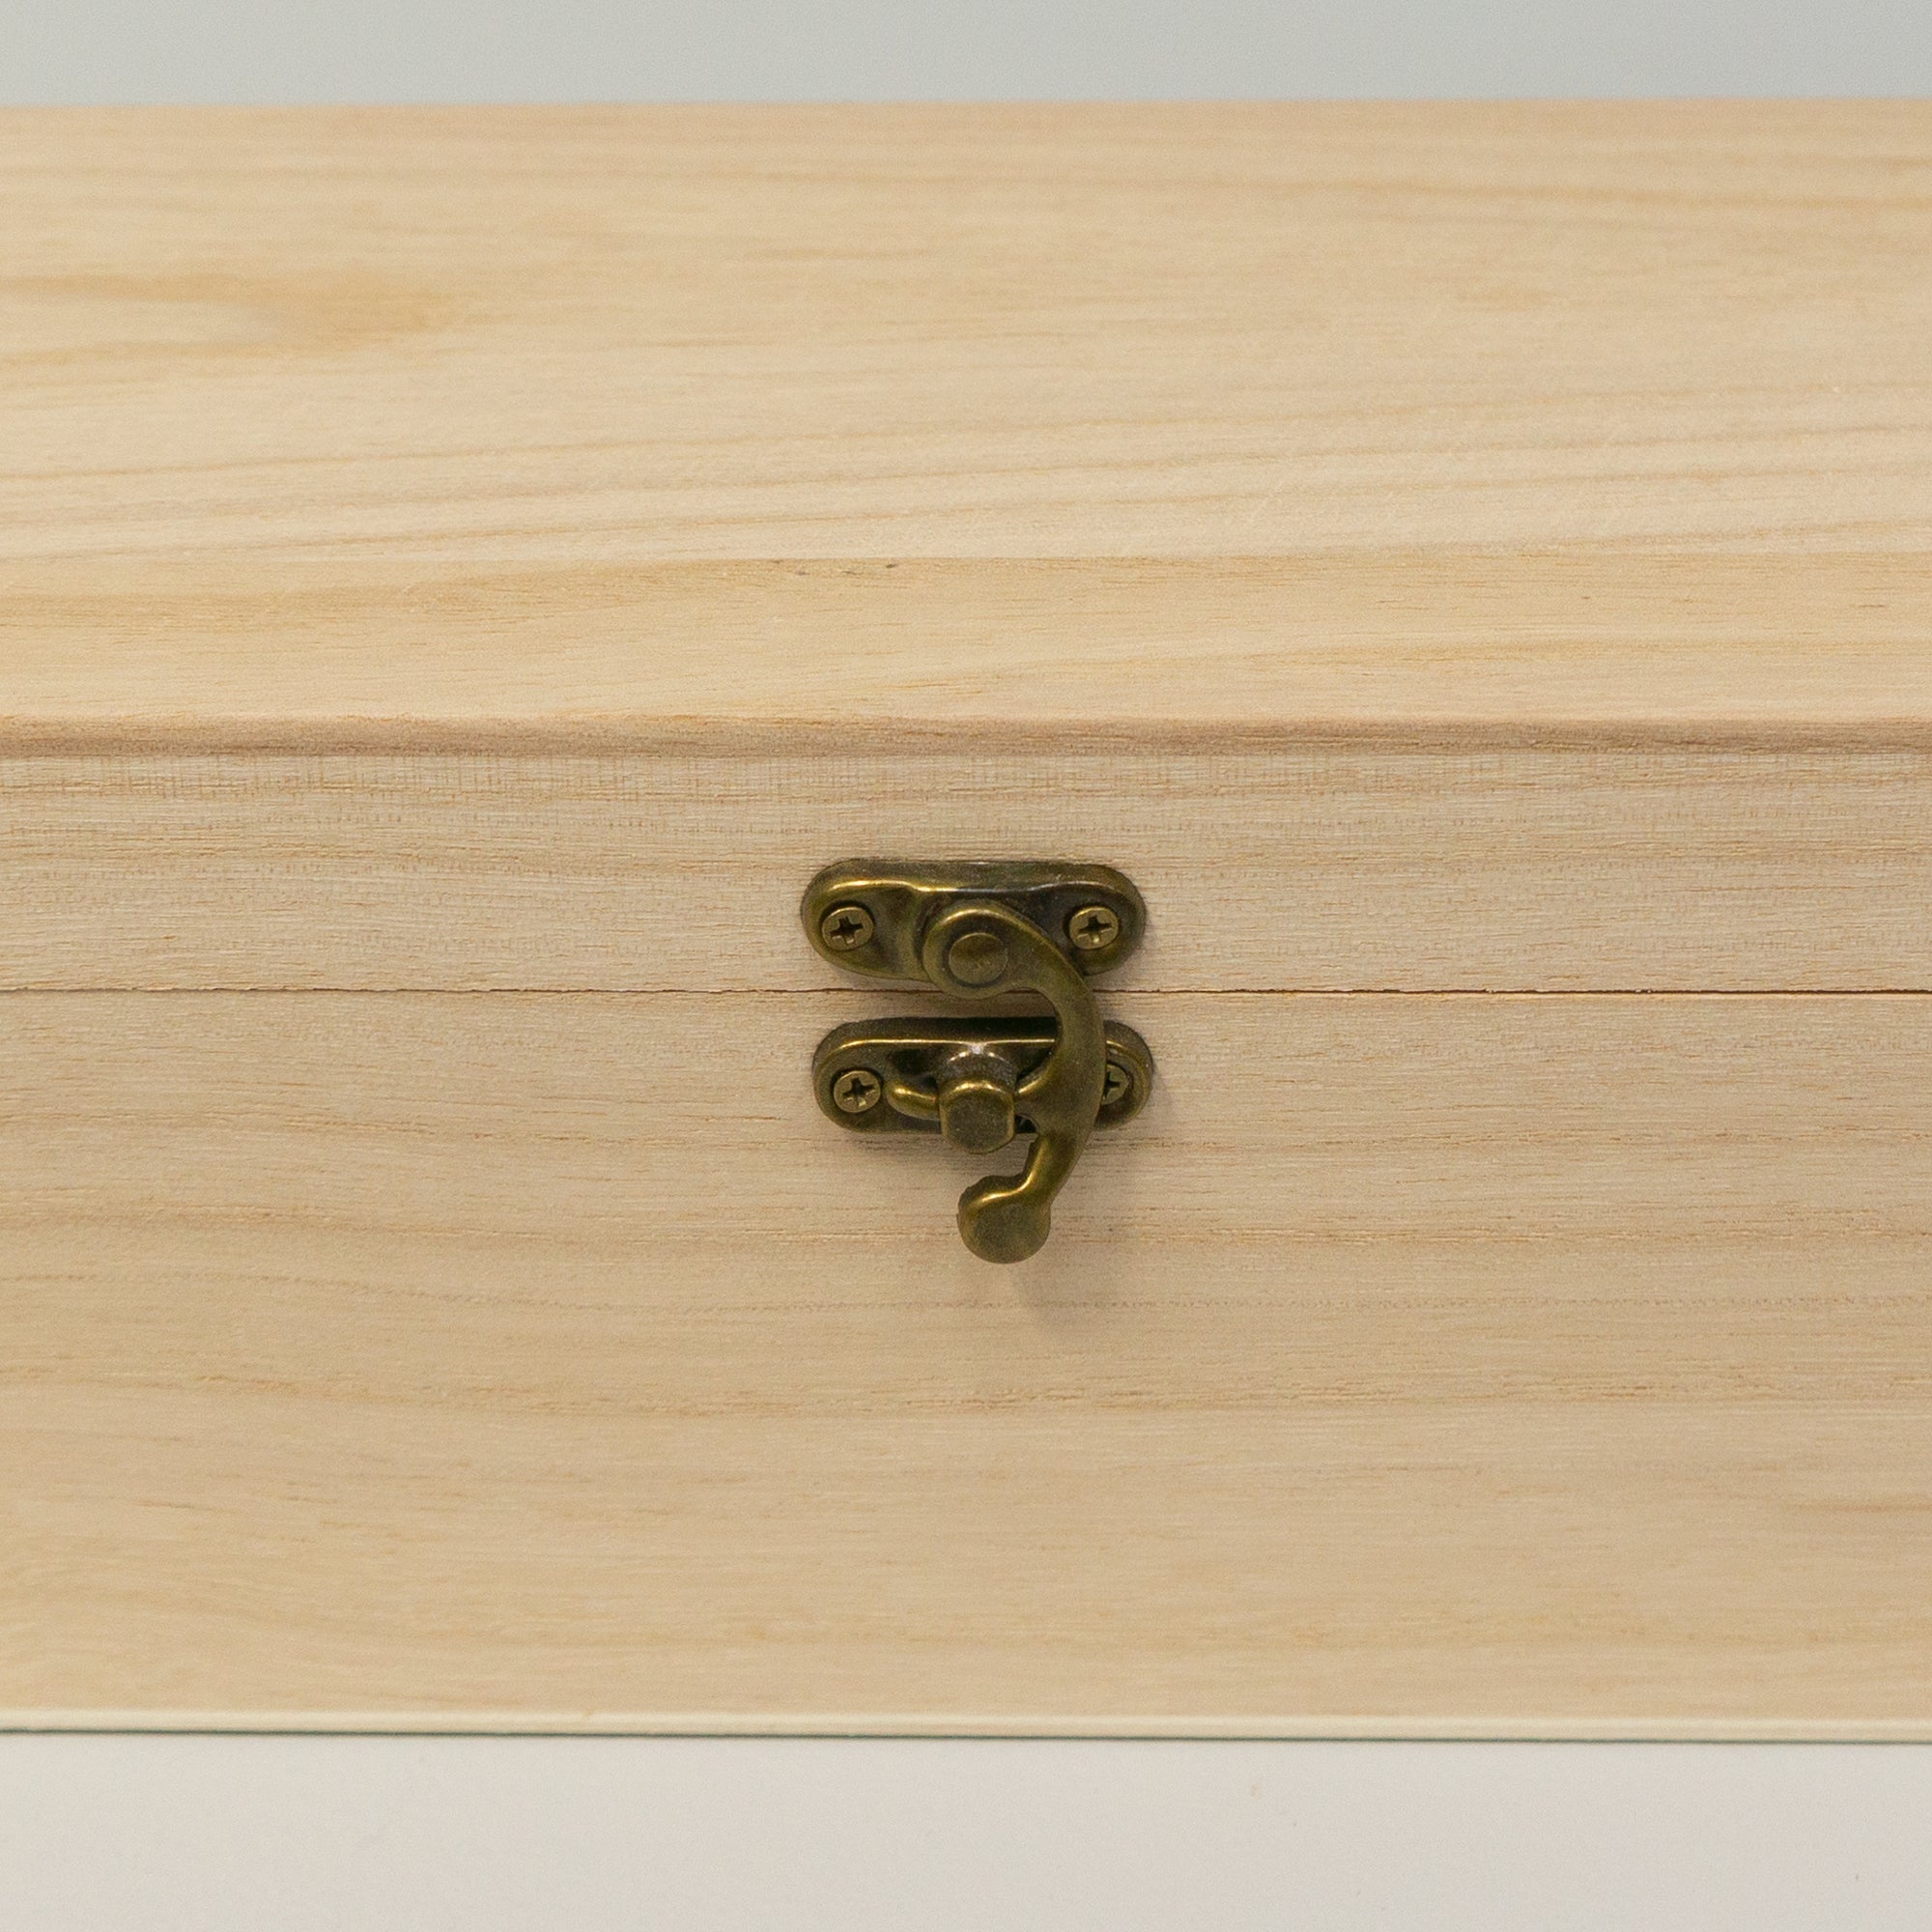 20th birthday wooden wine box. Custom engraved gifting box